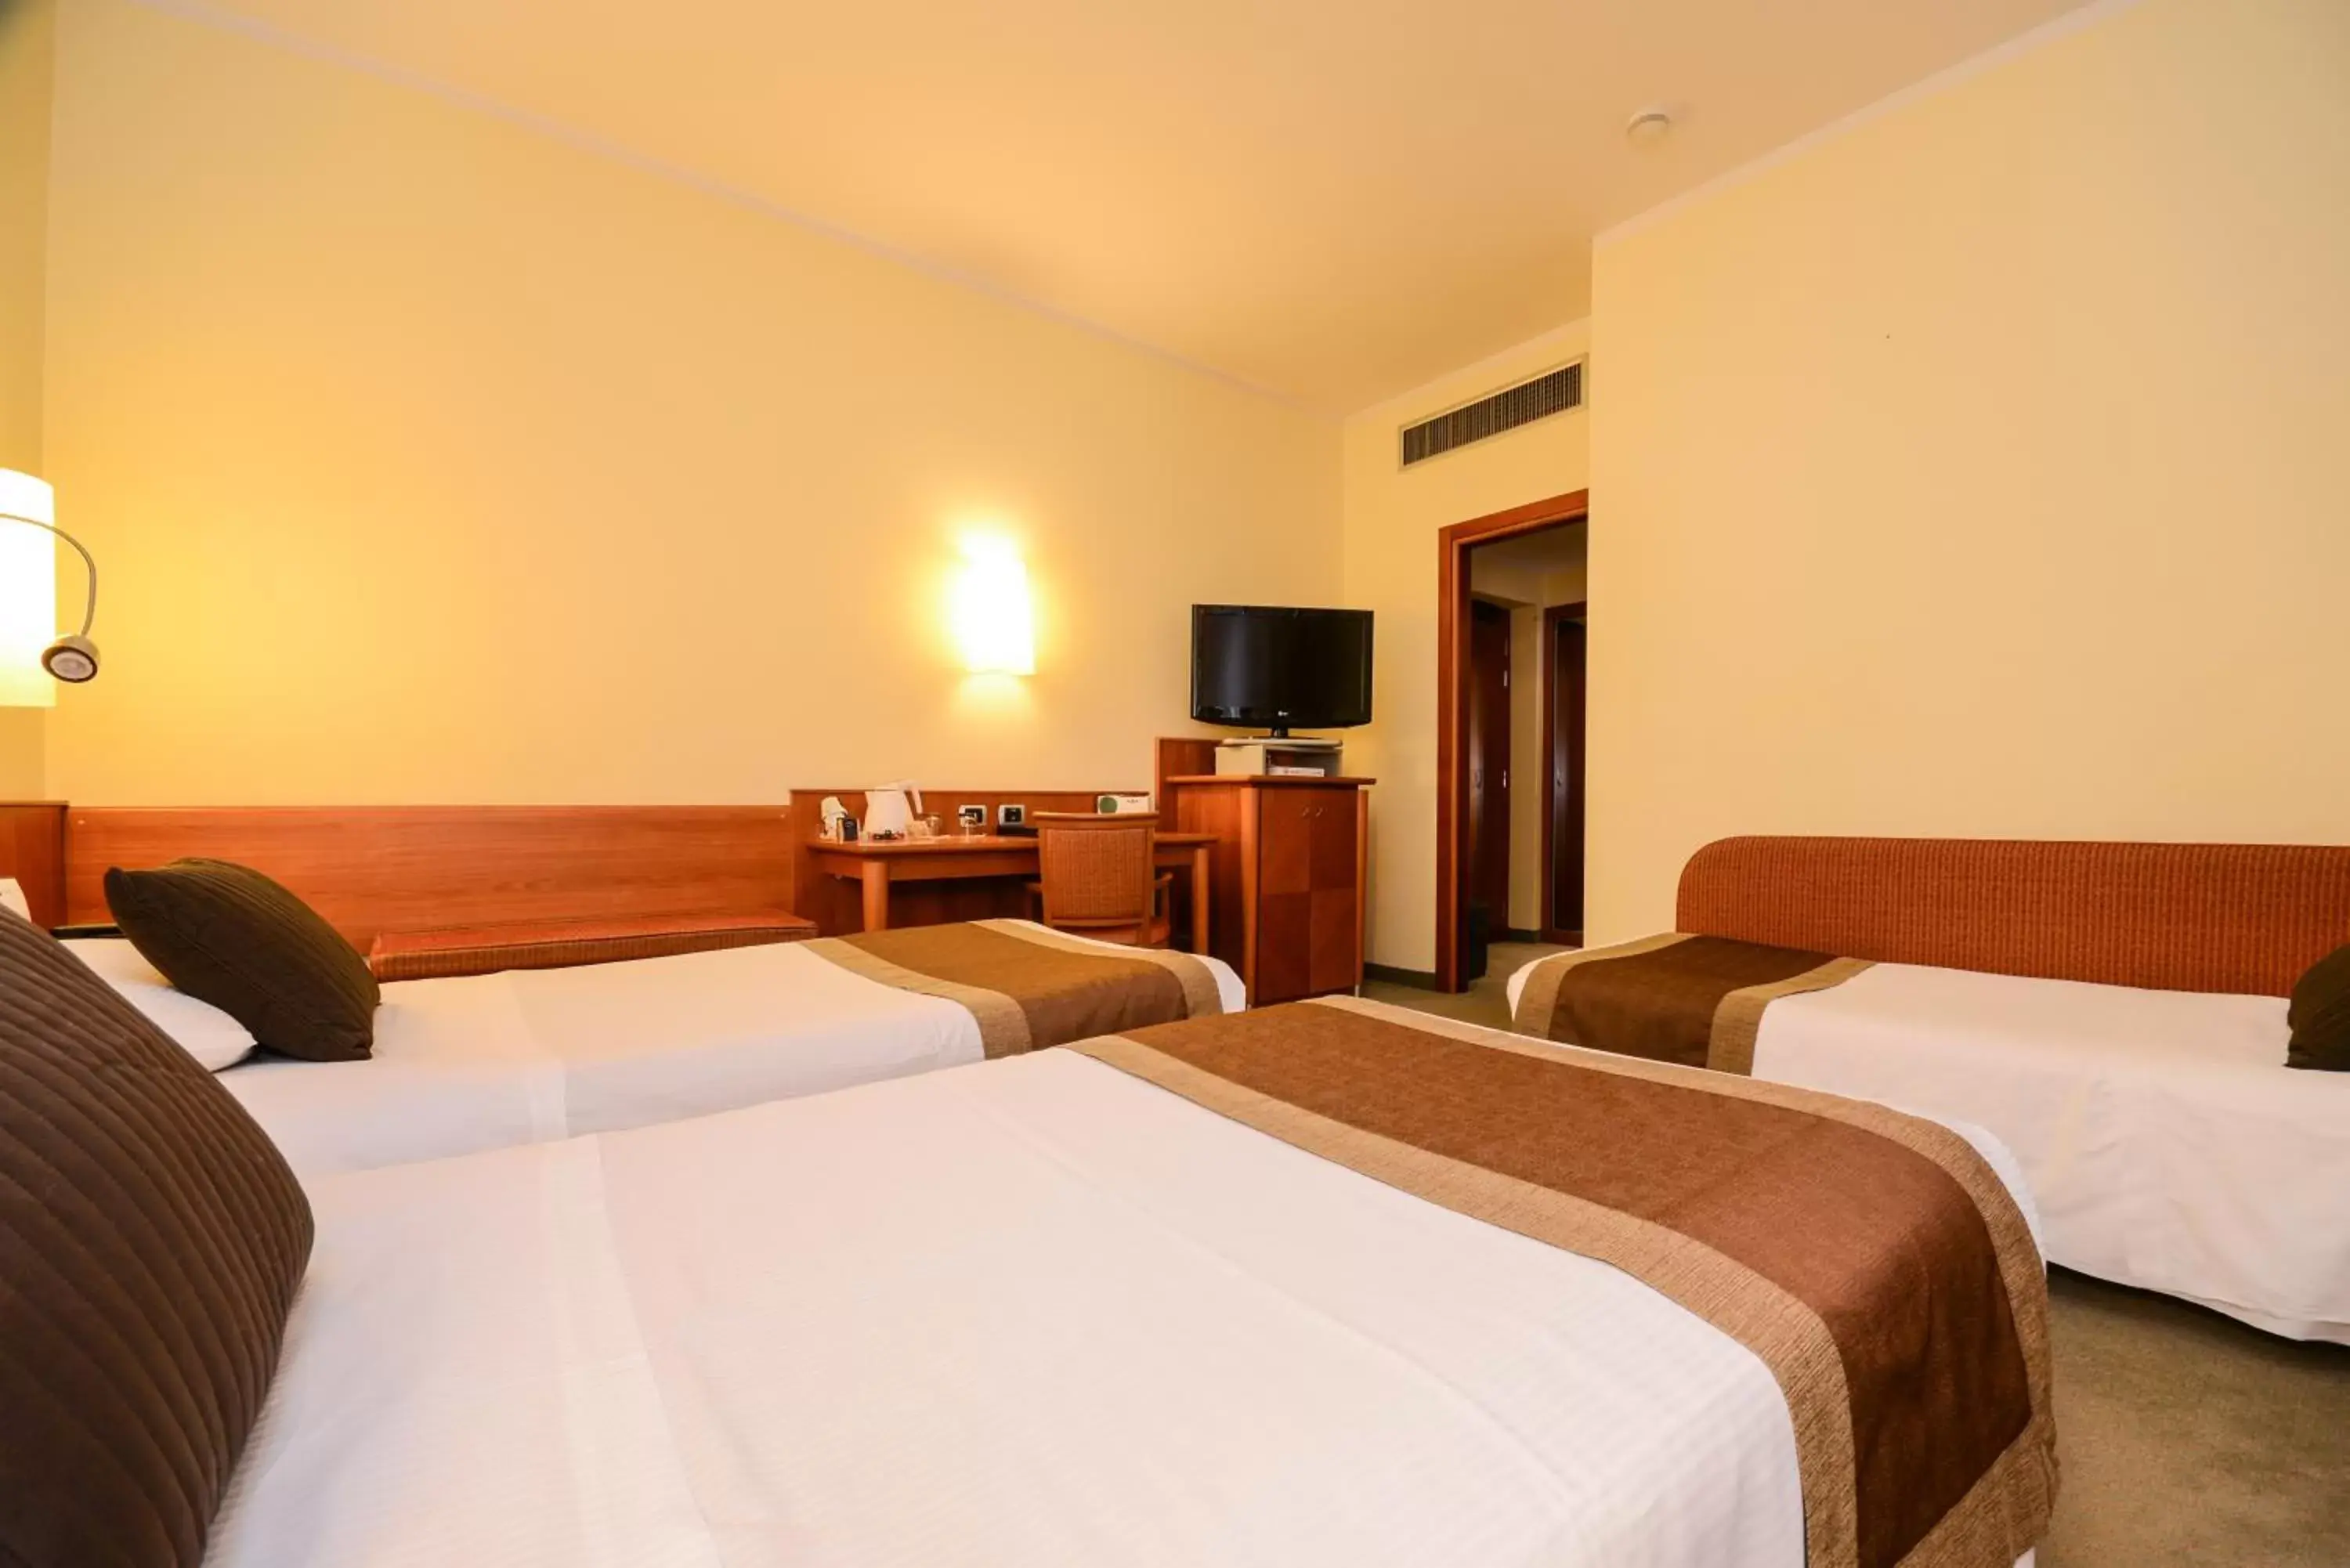 Standard Triple Room in Hotel Master